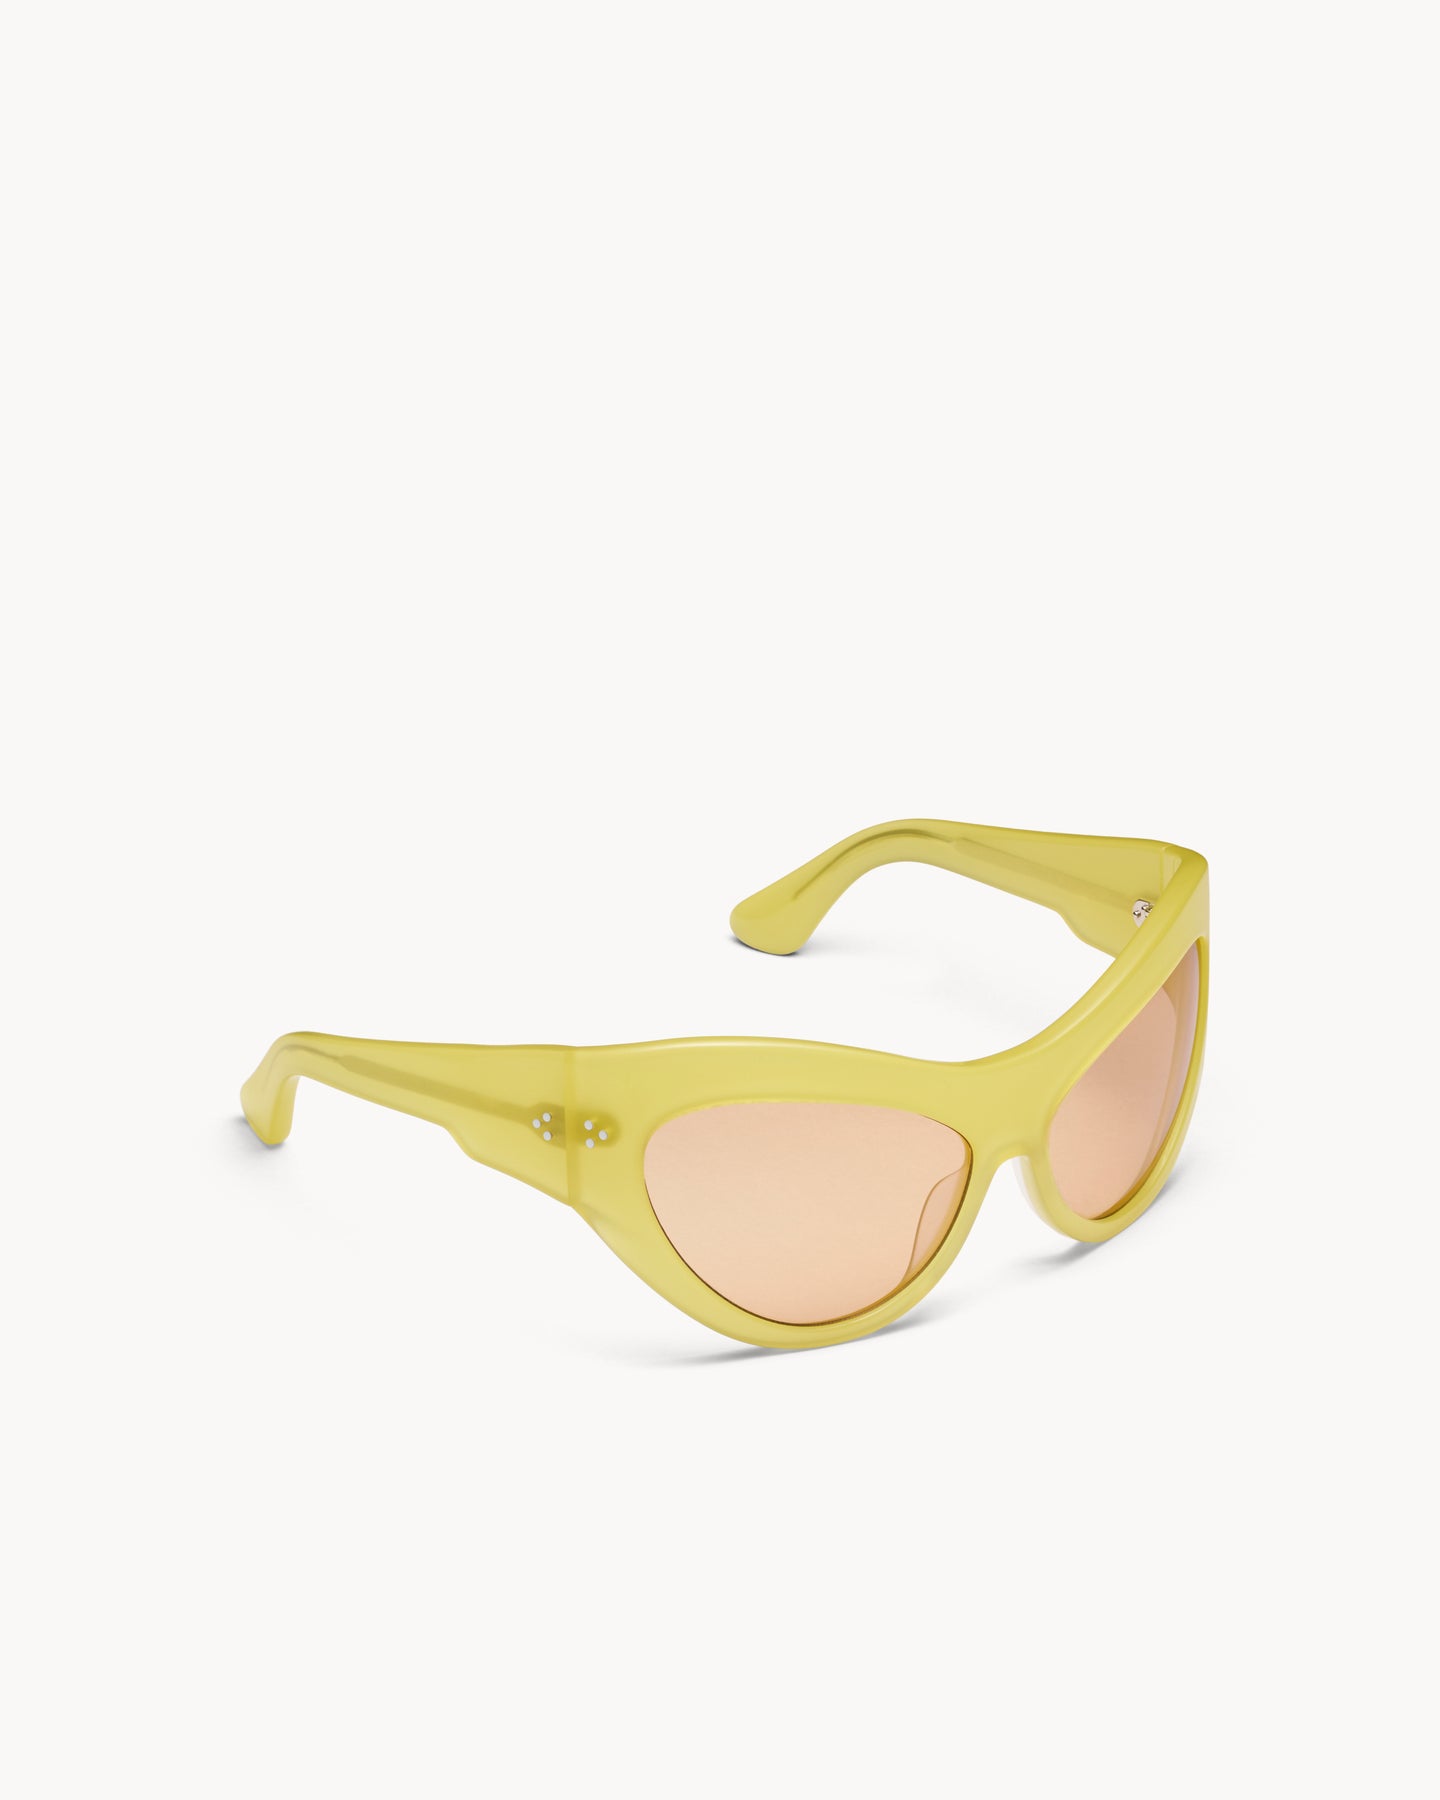 Port Tanger Darya Sunglasses in Limon Acetate and Amber Lenses 2